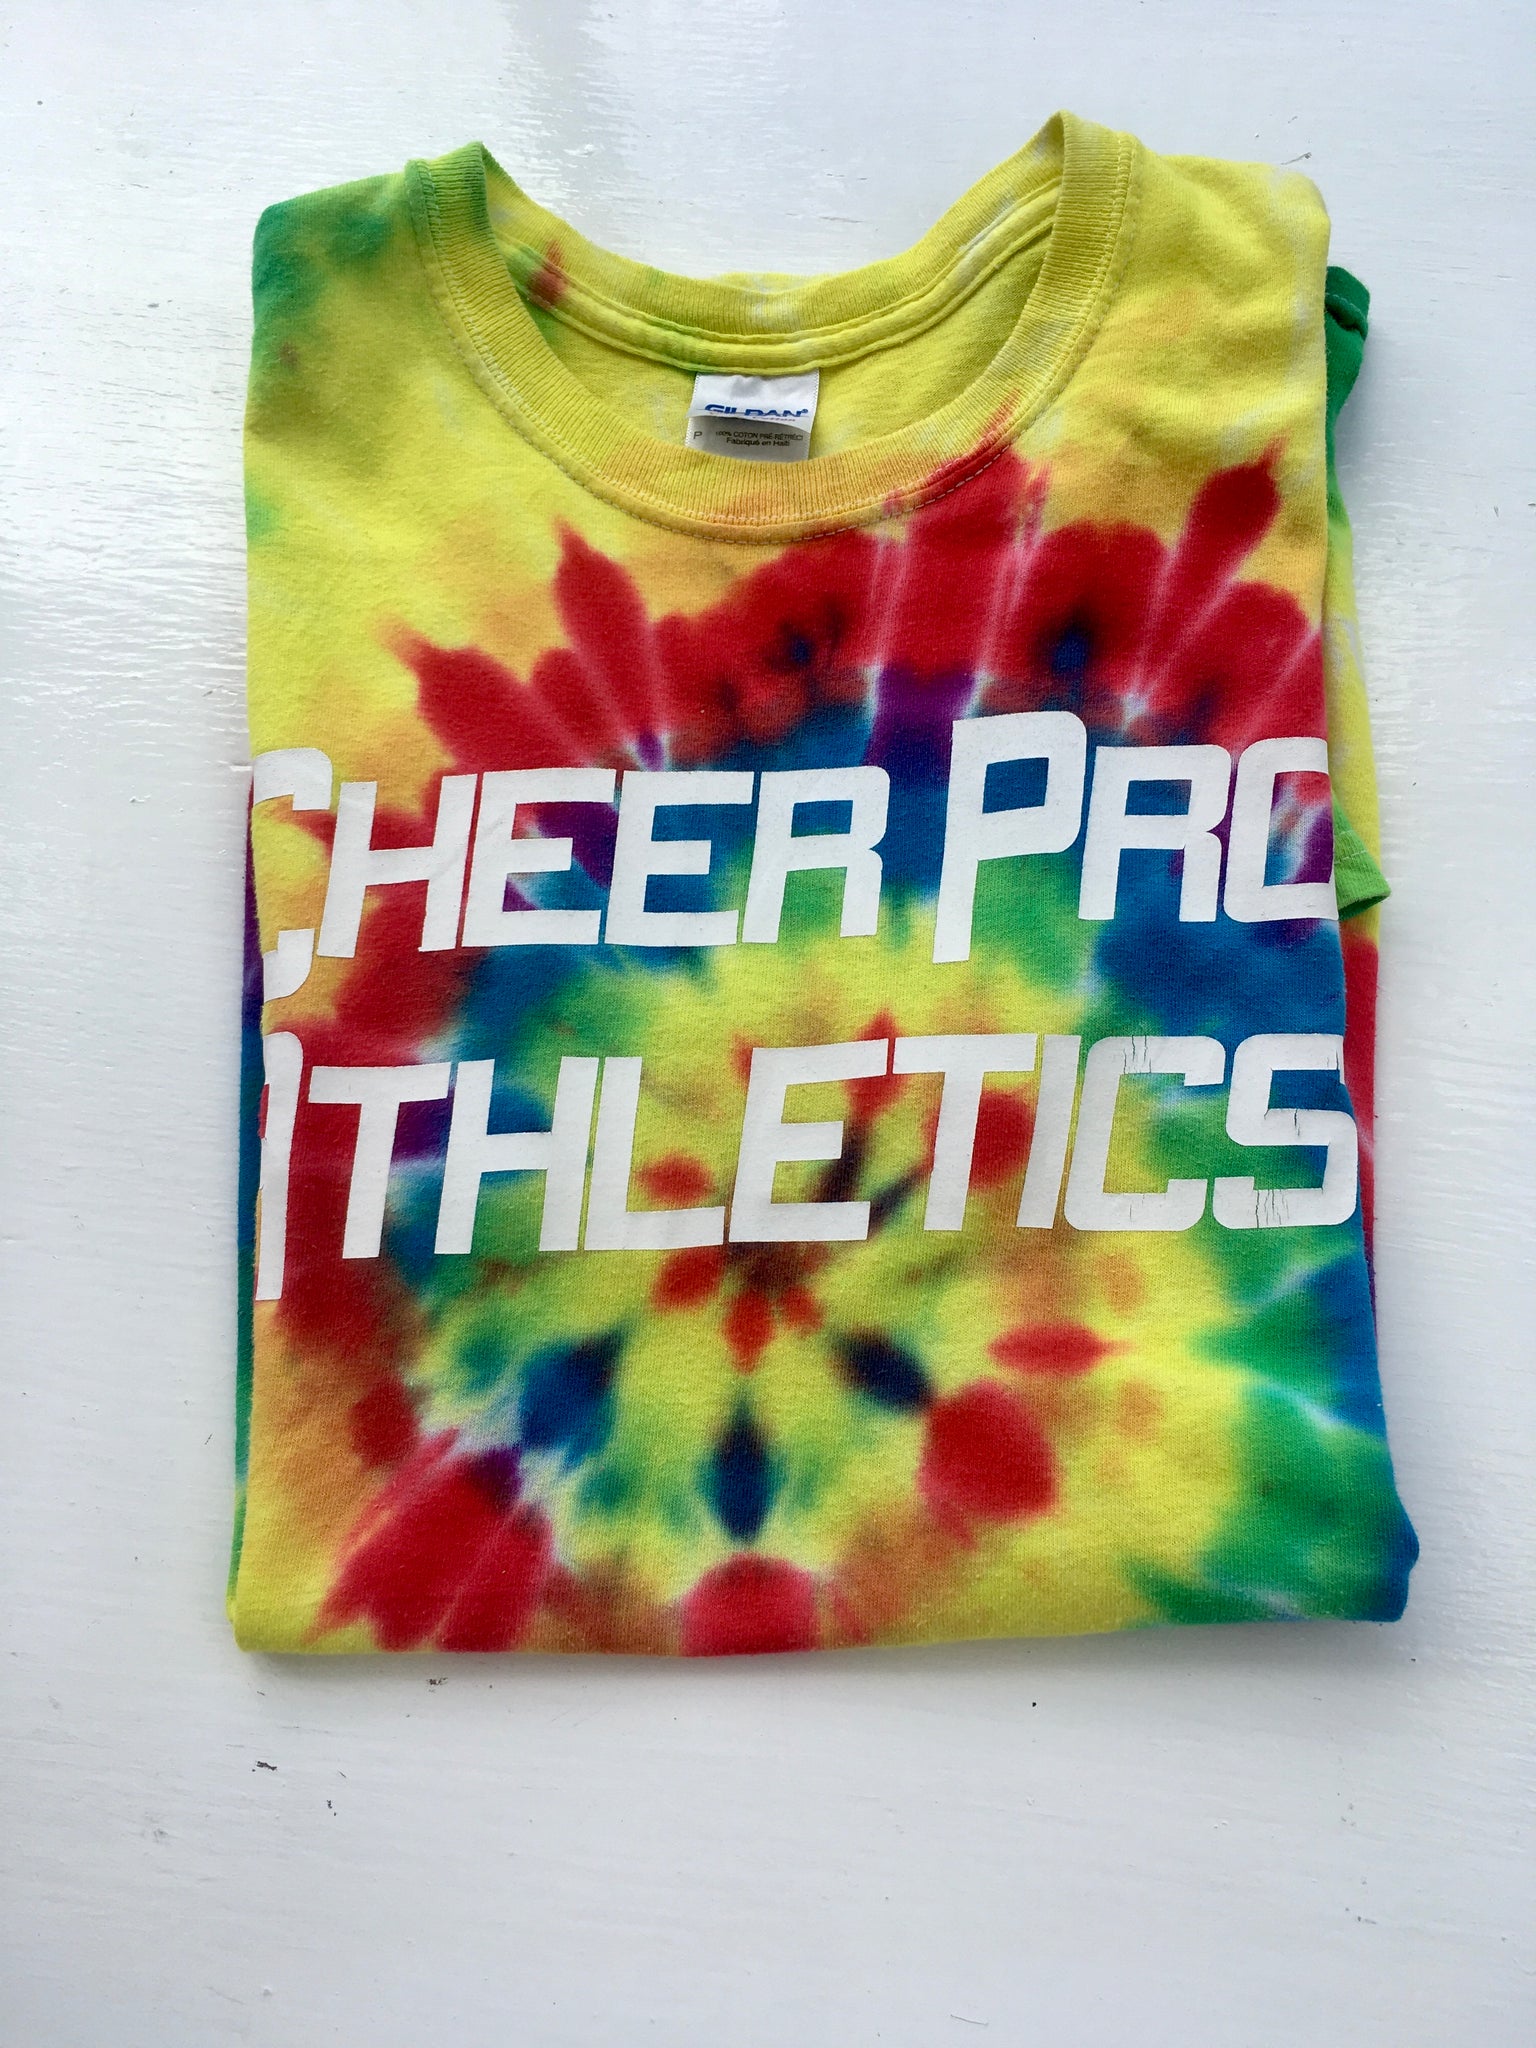 Fab bright tye dye Cheer Pro Athletics tee shirt S/M – Beatnik Emporium